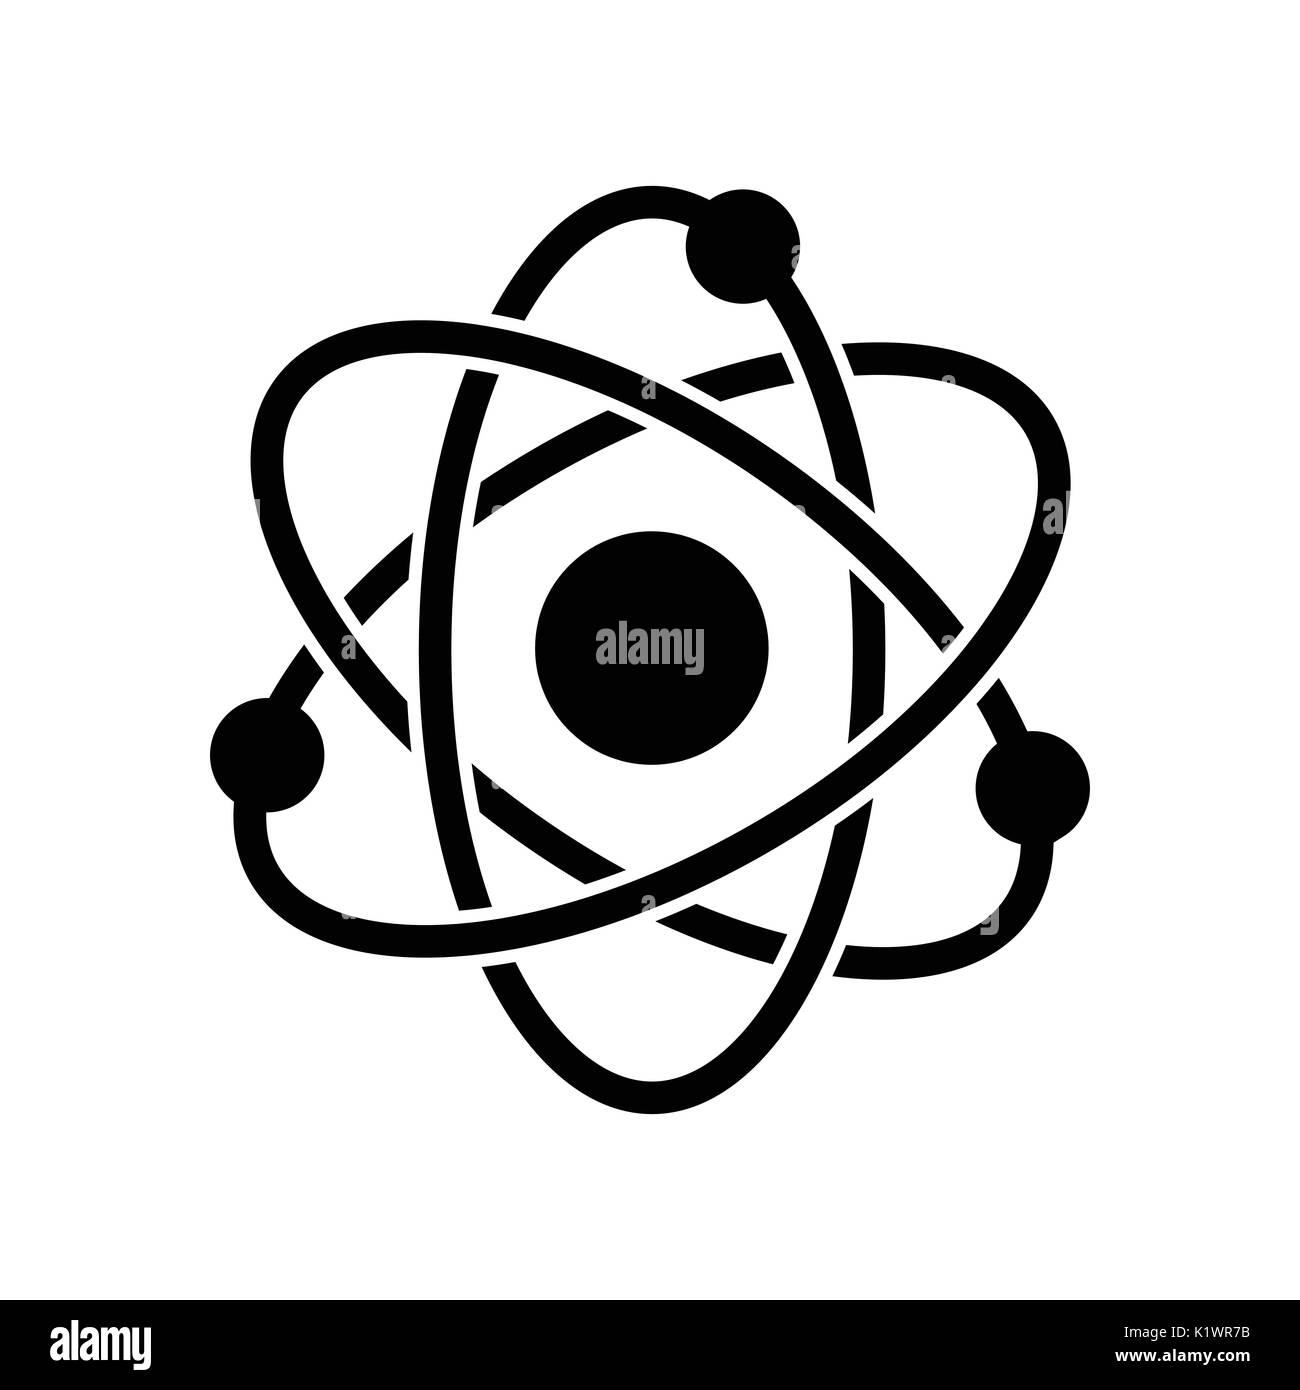 Atom icon, iconic symbol, on white background.  Vector Iconic Design. Stock Vector